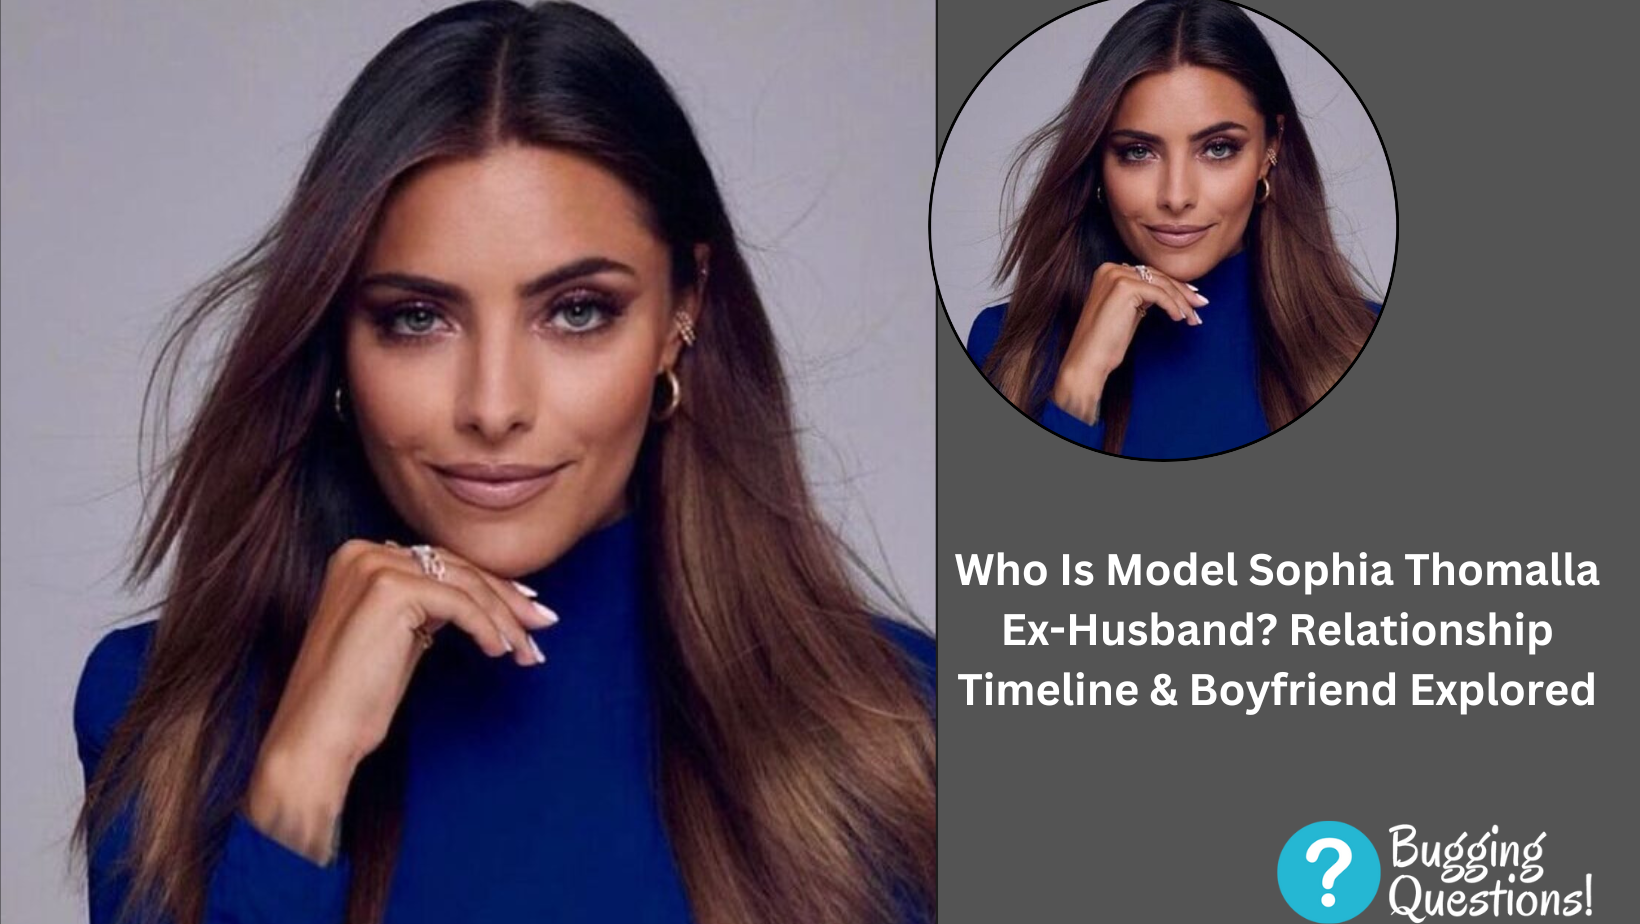 Who Is Model Sophia Thomalla Ex-Husband?